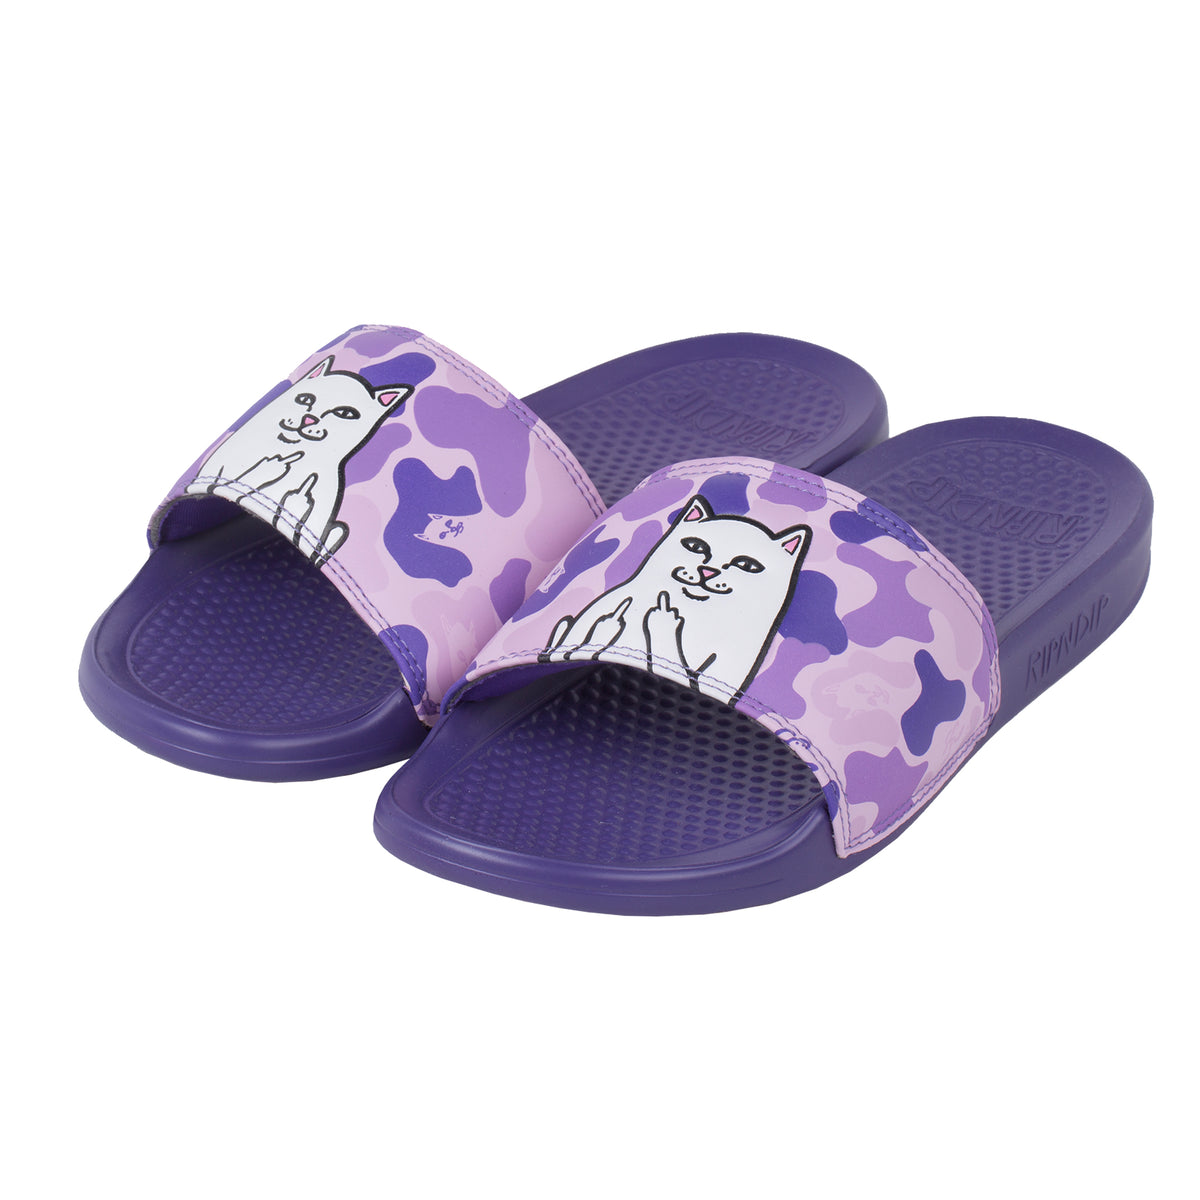 NEW WB RIPNDIP Nermal Purple Camo Slide Sandals Men’s 4 & 5 Women’s 5.5 & 6.5